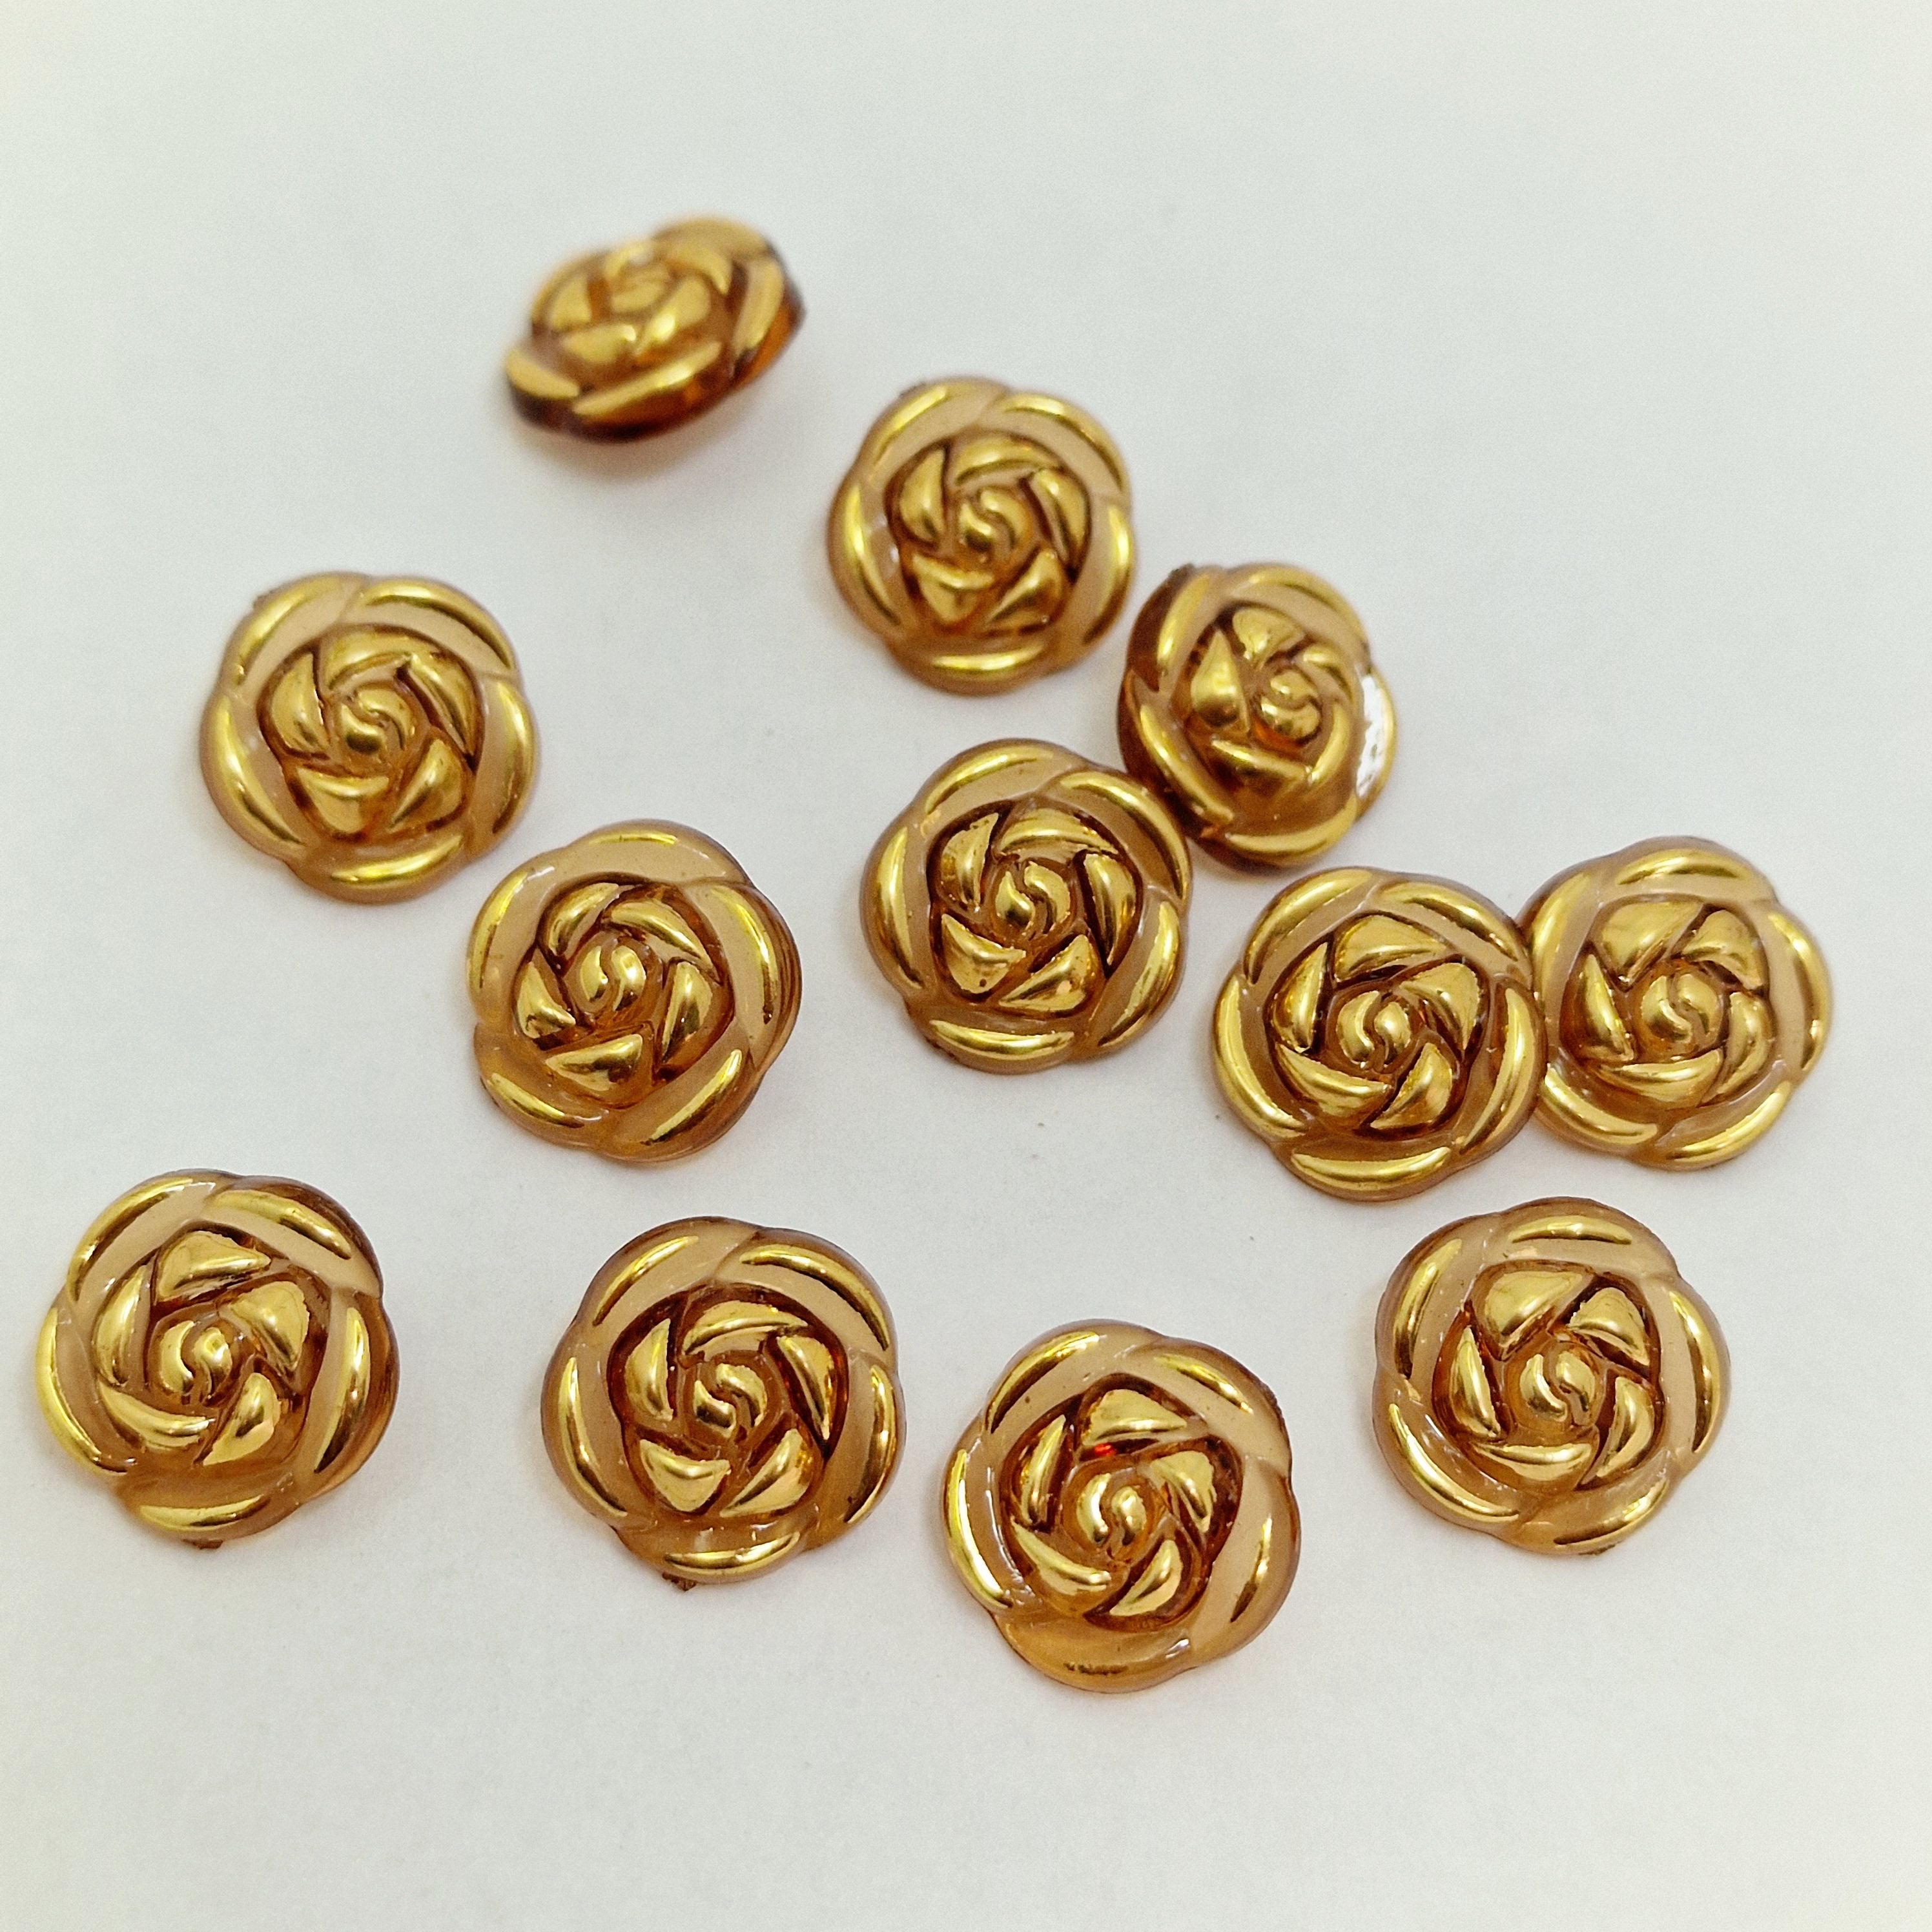 MajorCrafts 40pcs 13mm Brown & Gold Rose Flower Shank Resin Buttons